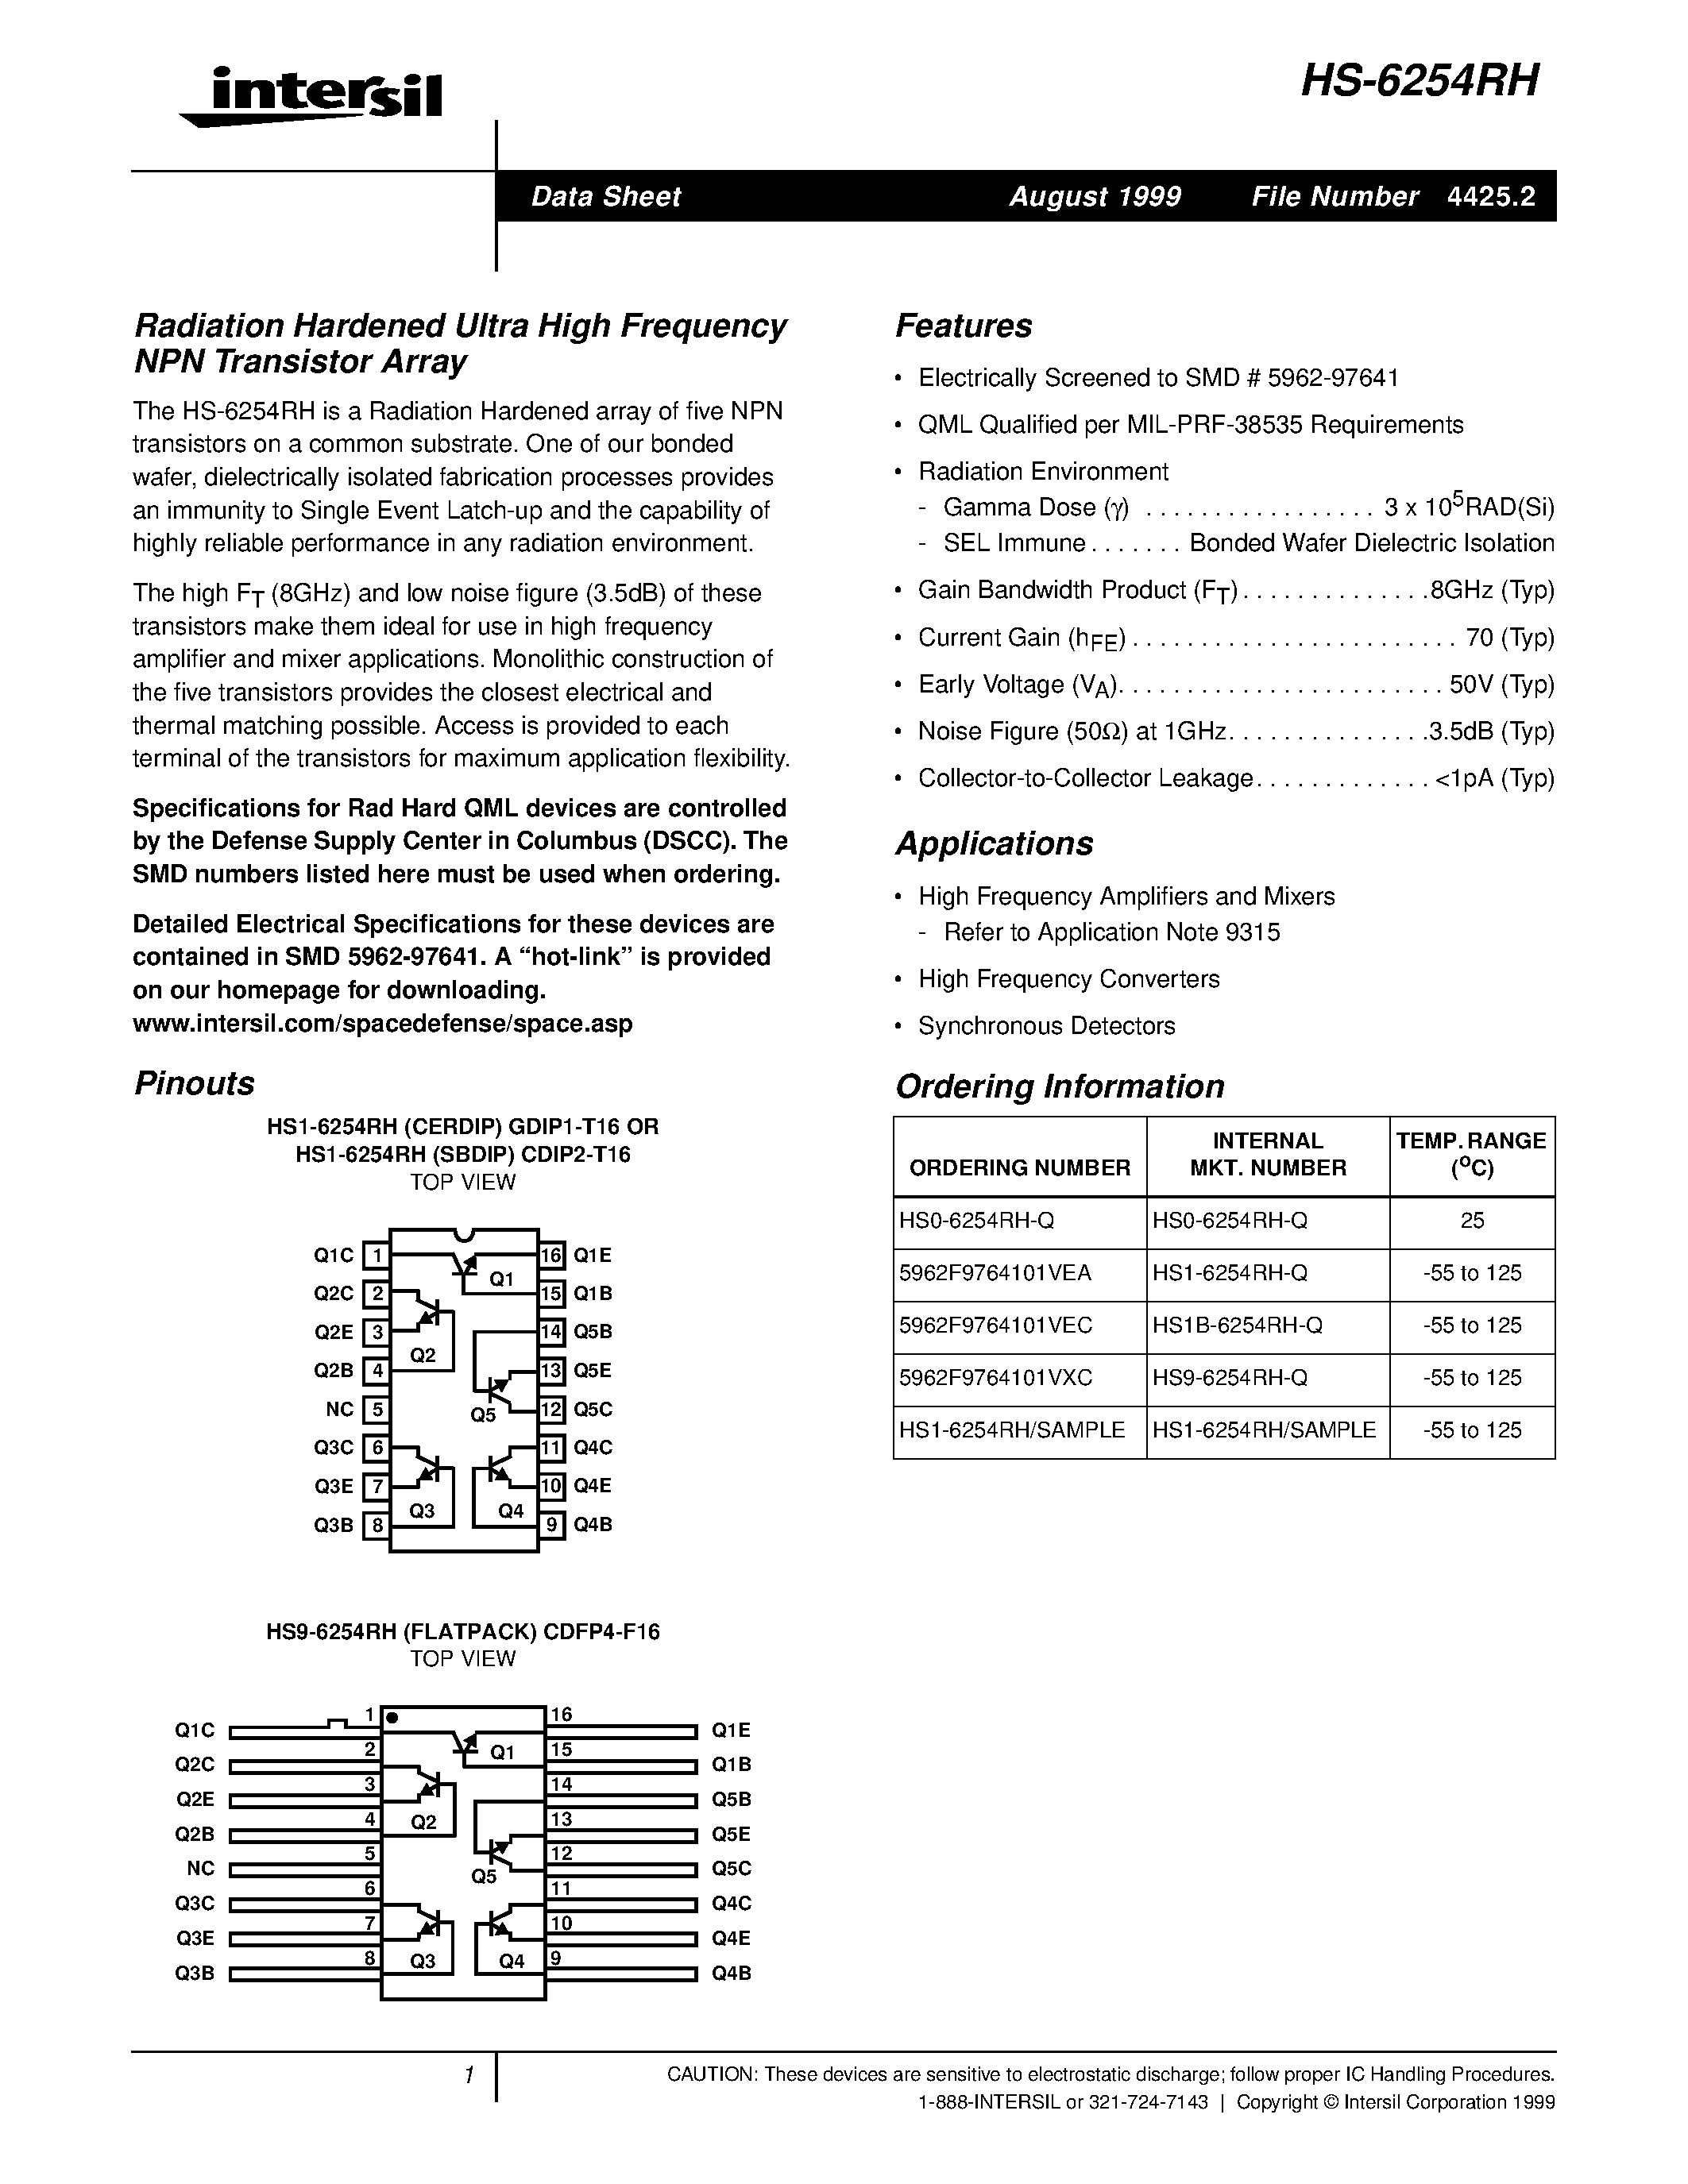 Даташит HS9-6254RH-Q - Radiation Hardened Ultra High Frequency NPN Transistor Array страница 1